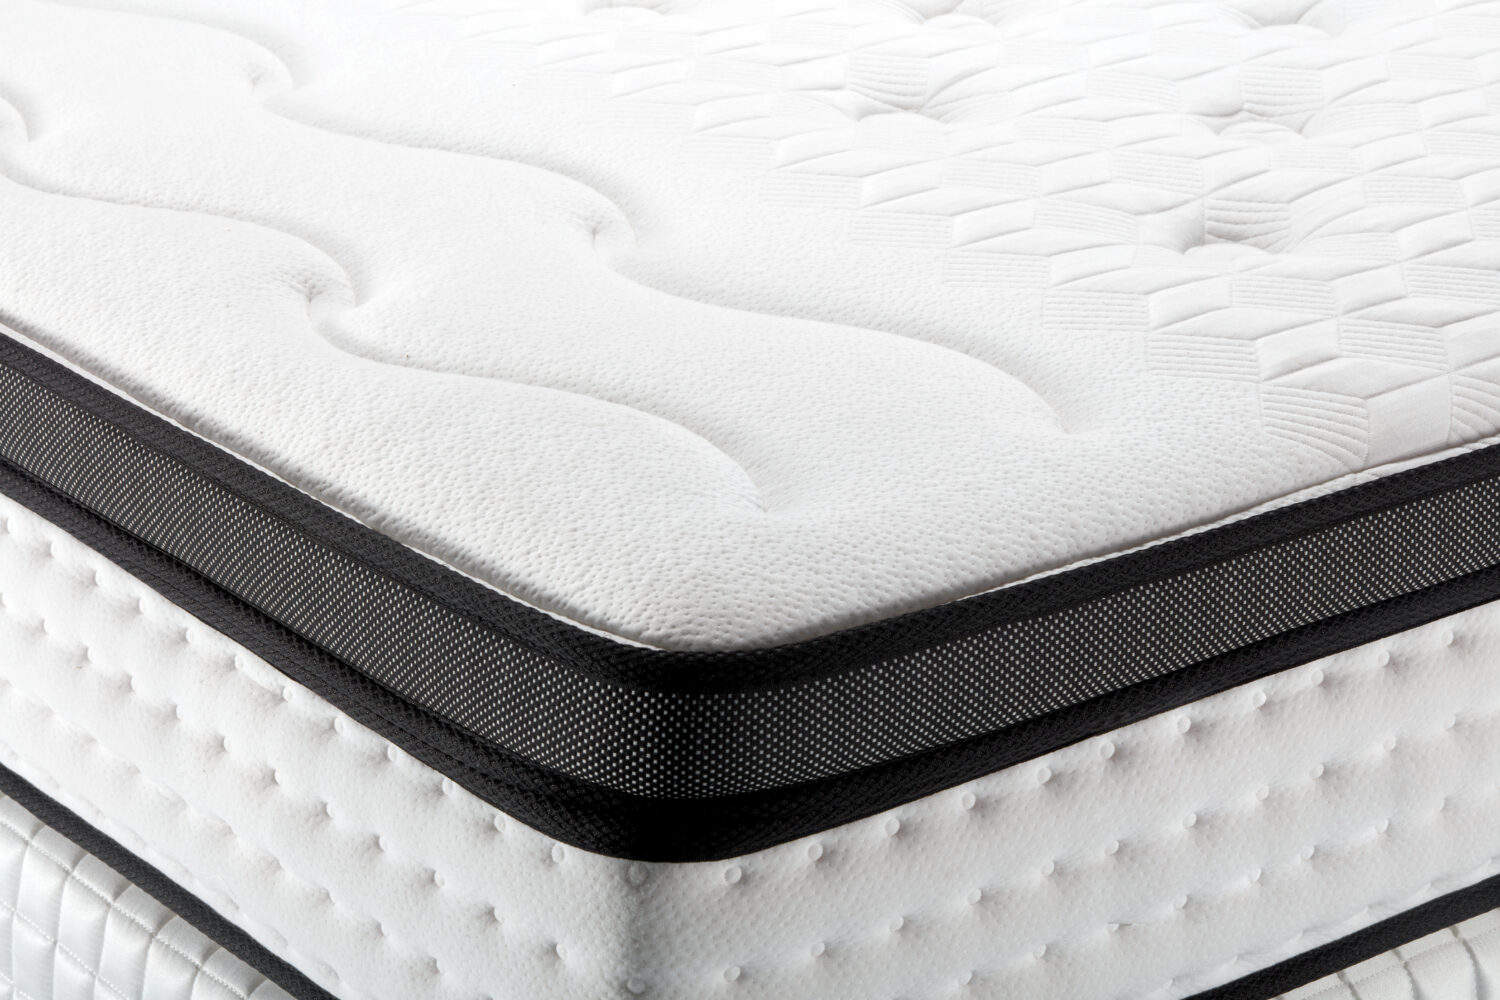 Closeup background of mattress